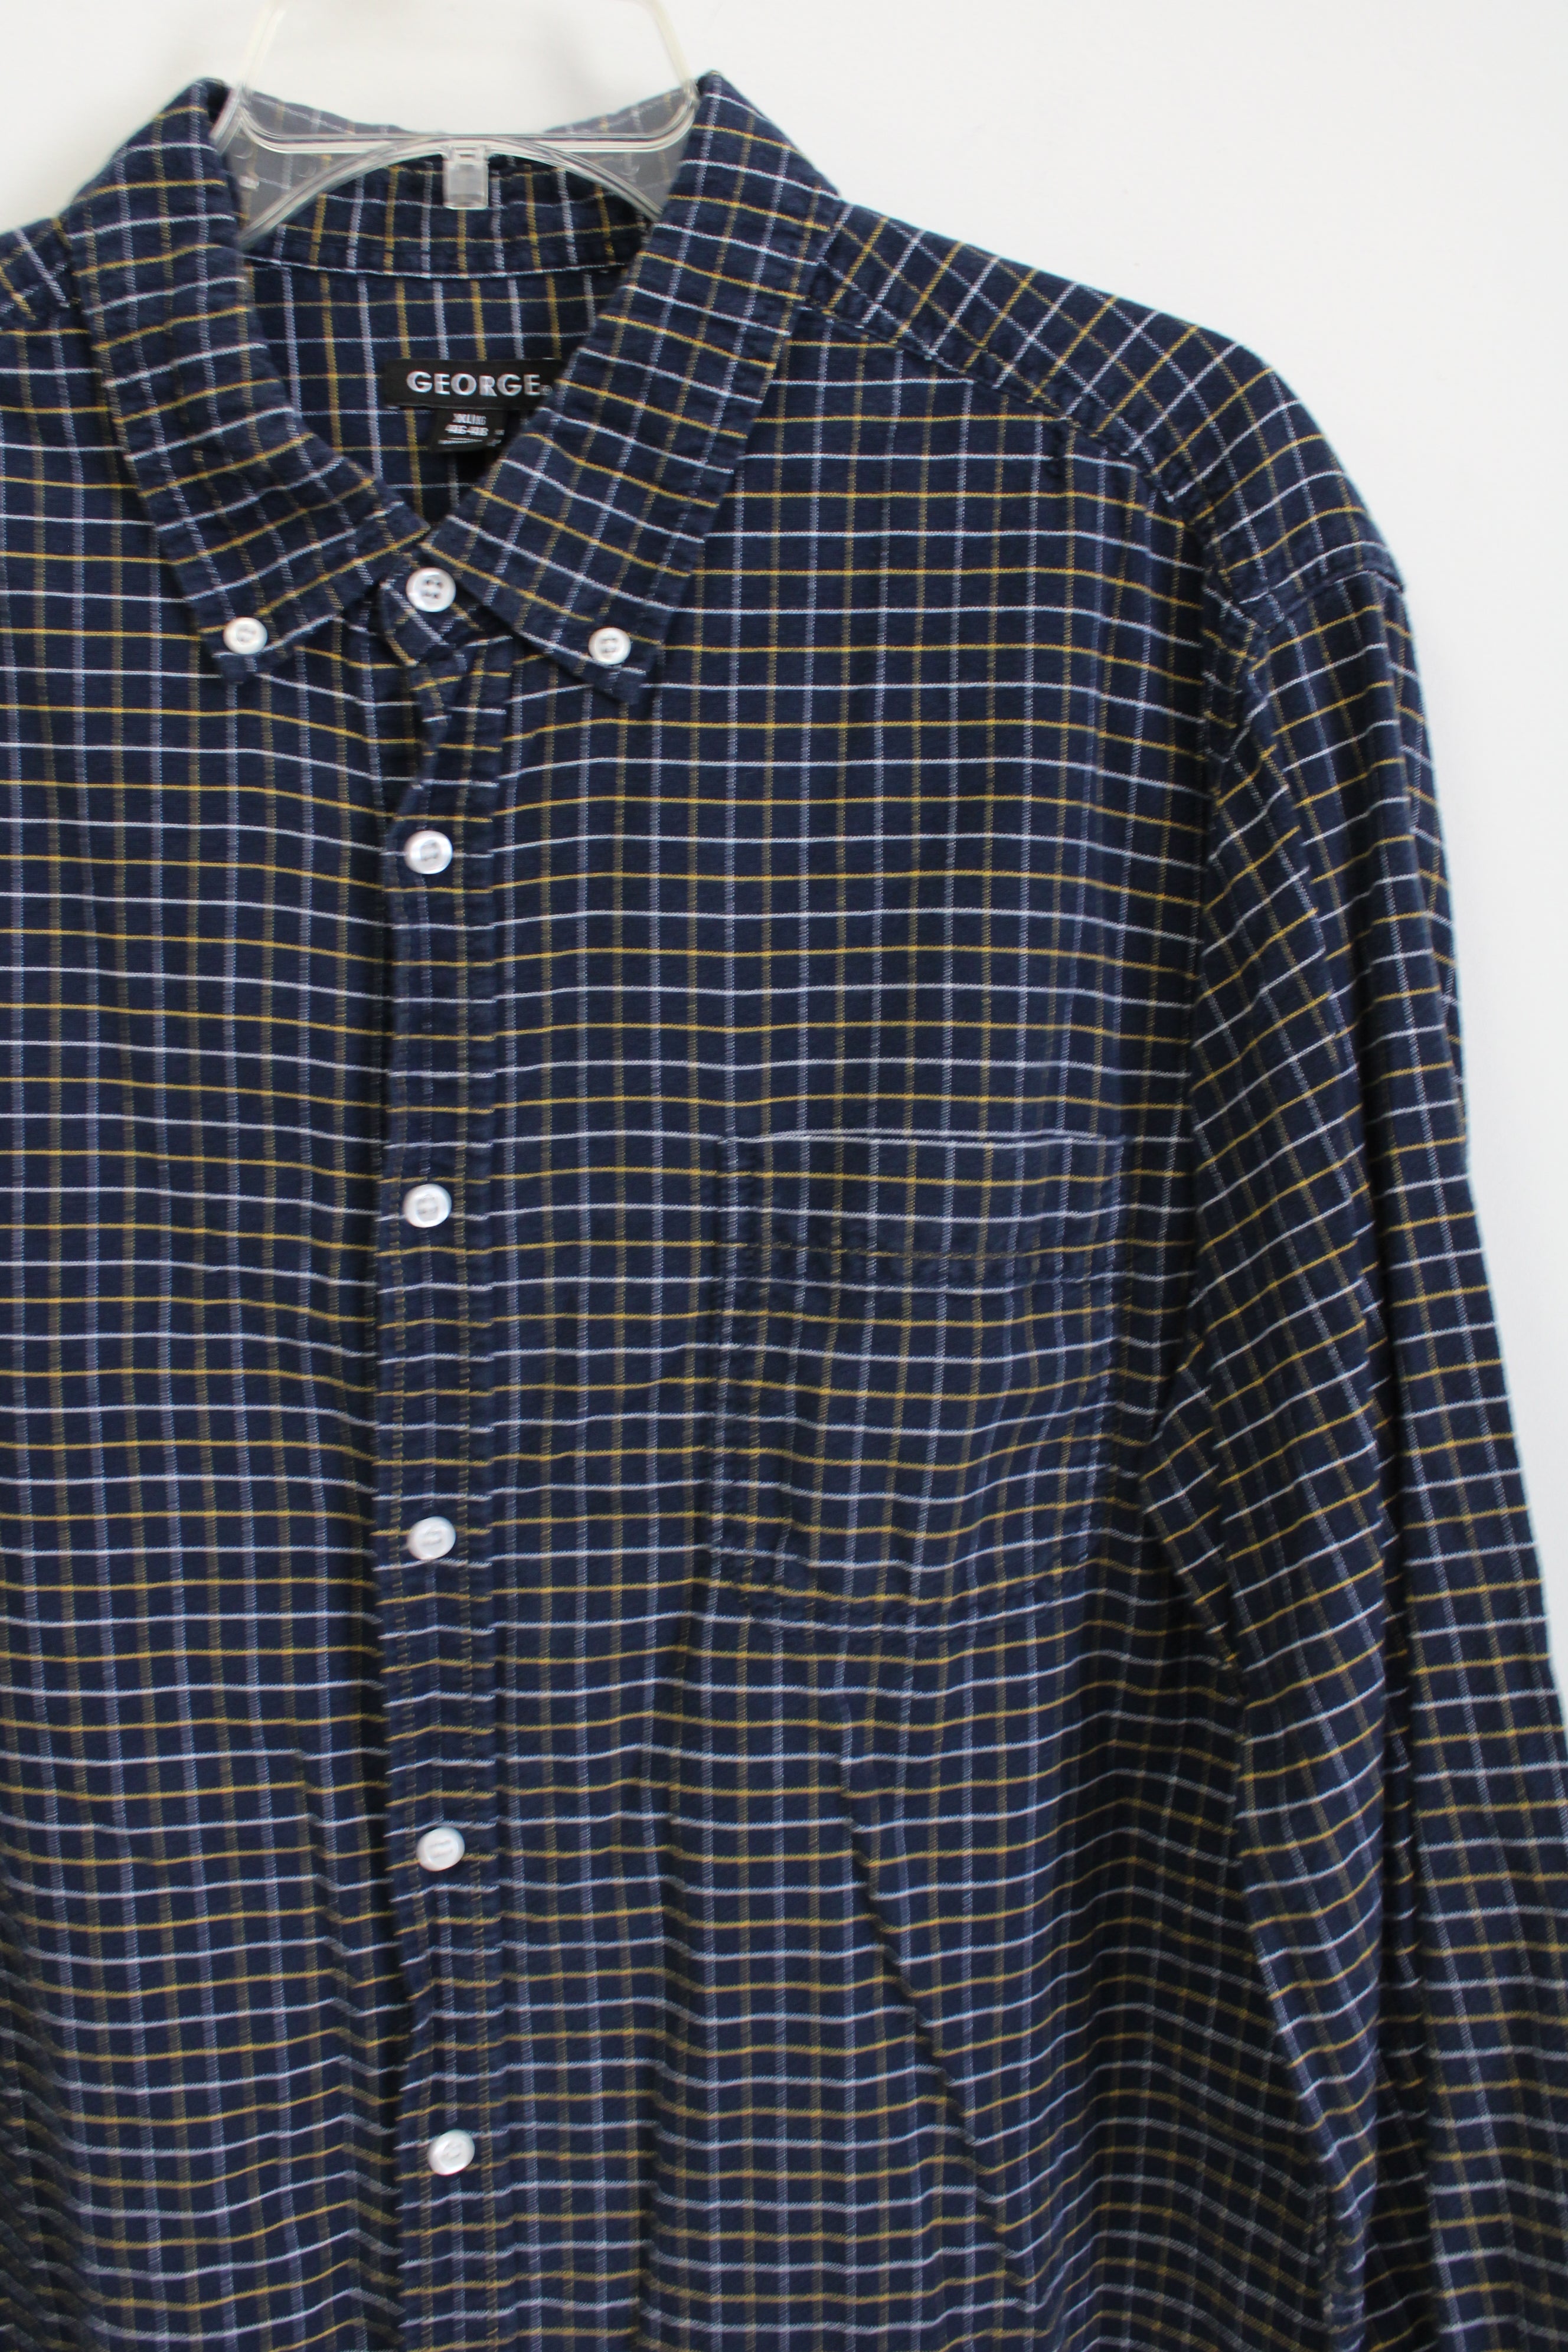 George Blue Plaid Button Down Flannel | XL